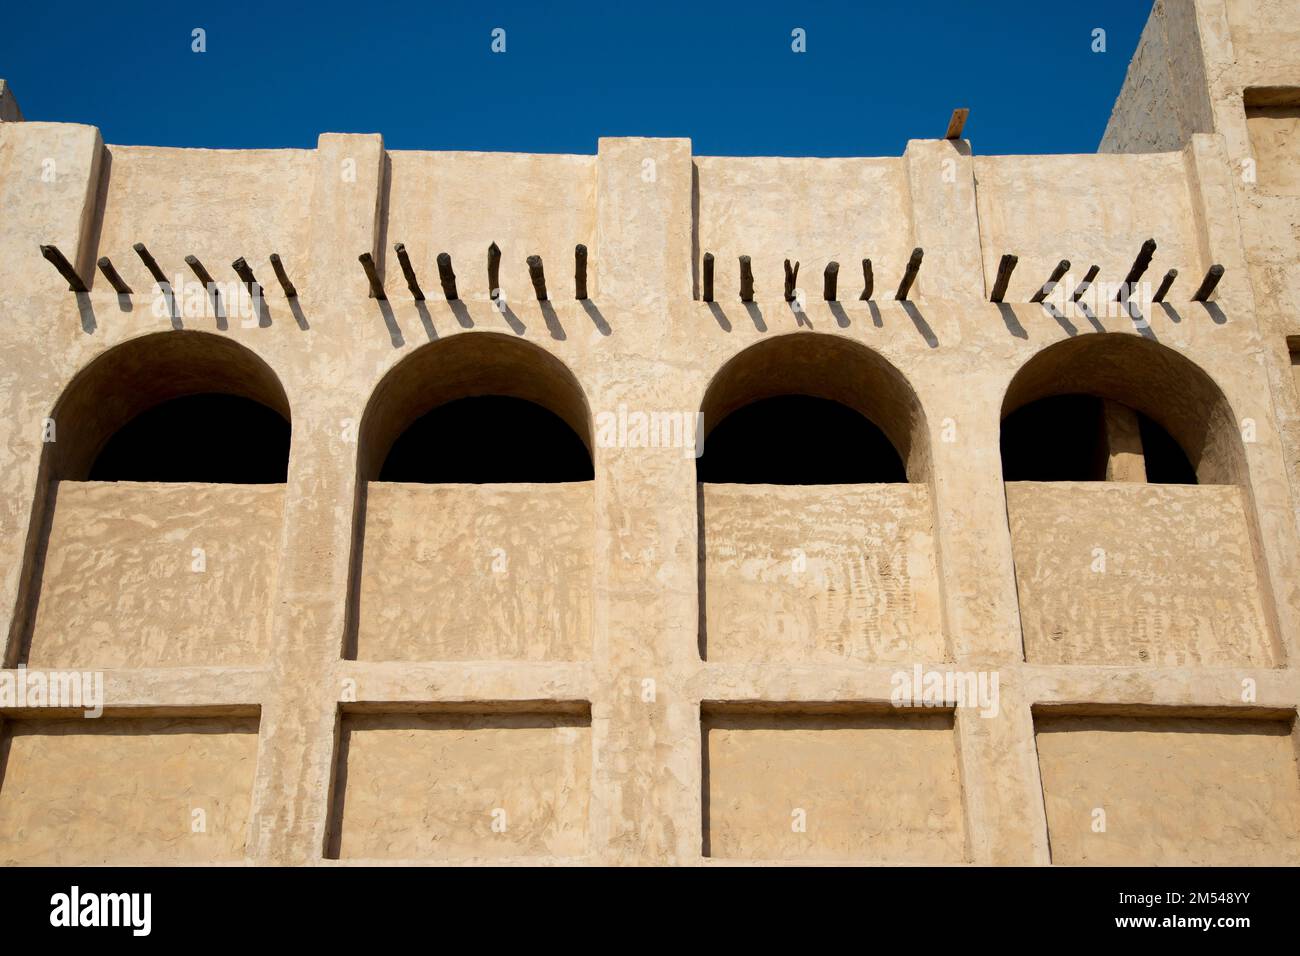 Traditional Arabic Architecture - Qatar Stock Photo